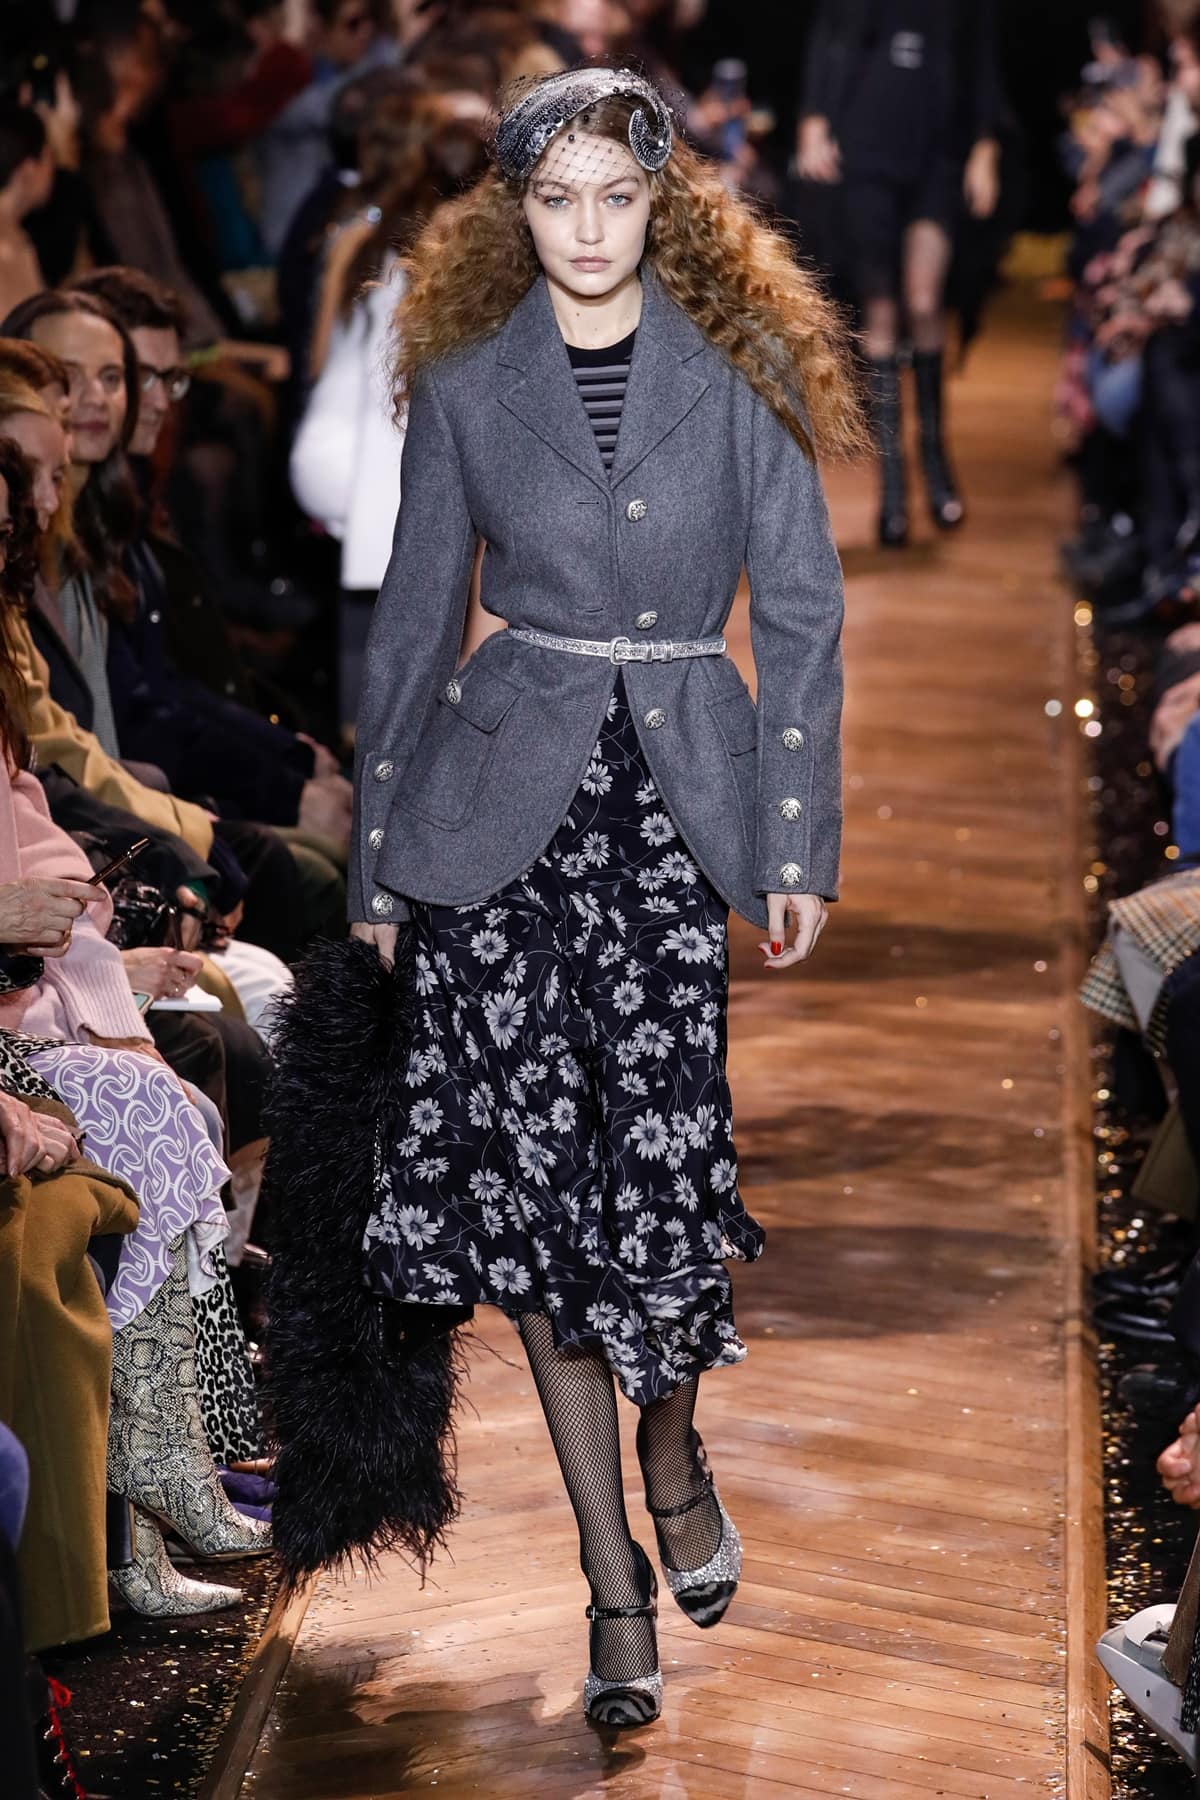 Gigi Hadid walks the runway at the Michael Kors fashion show during New York Fashion Week